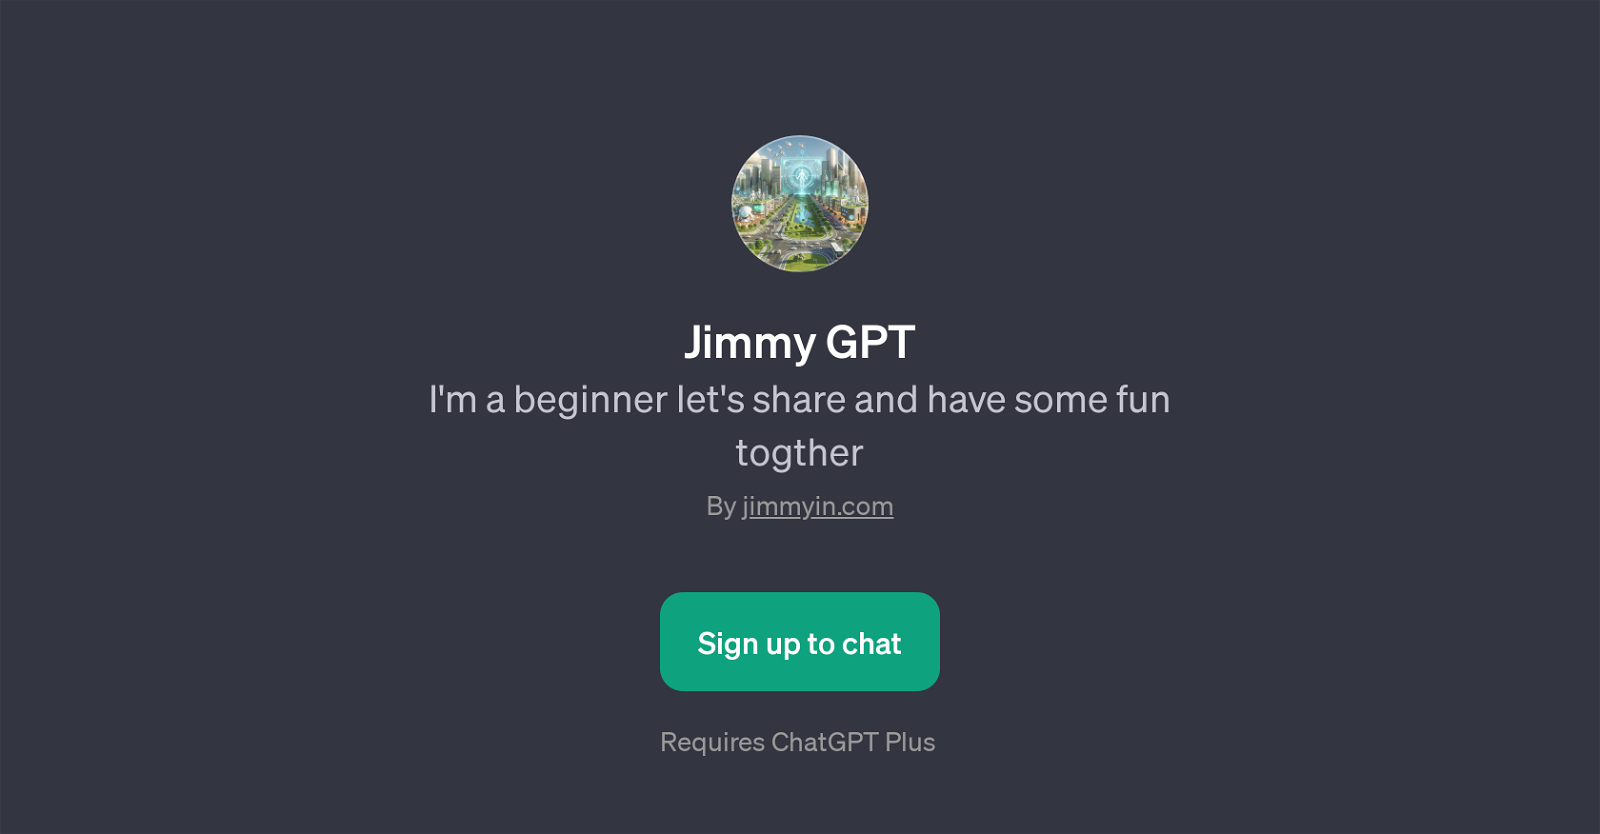 Jimmy GPT website